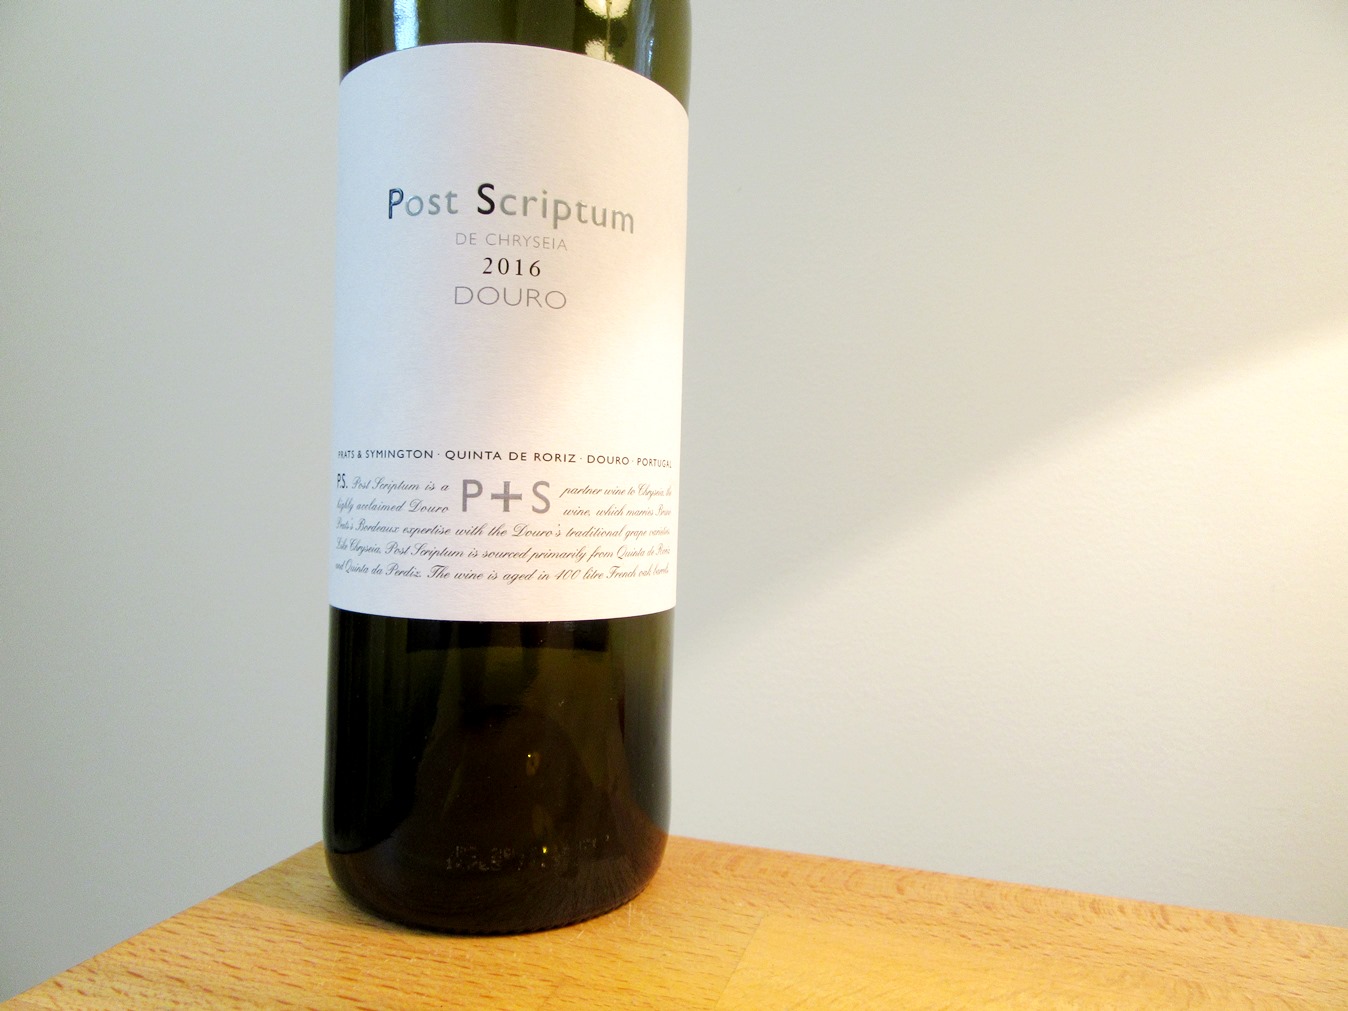 Prats & Symington, Post Scriptum De Chryseia 2016, Douro, Portugal, Wine Casual